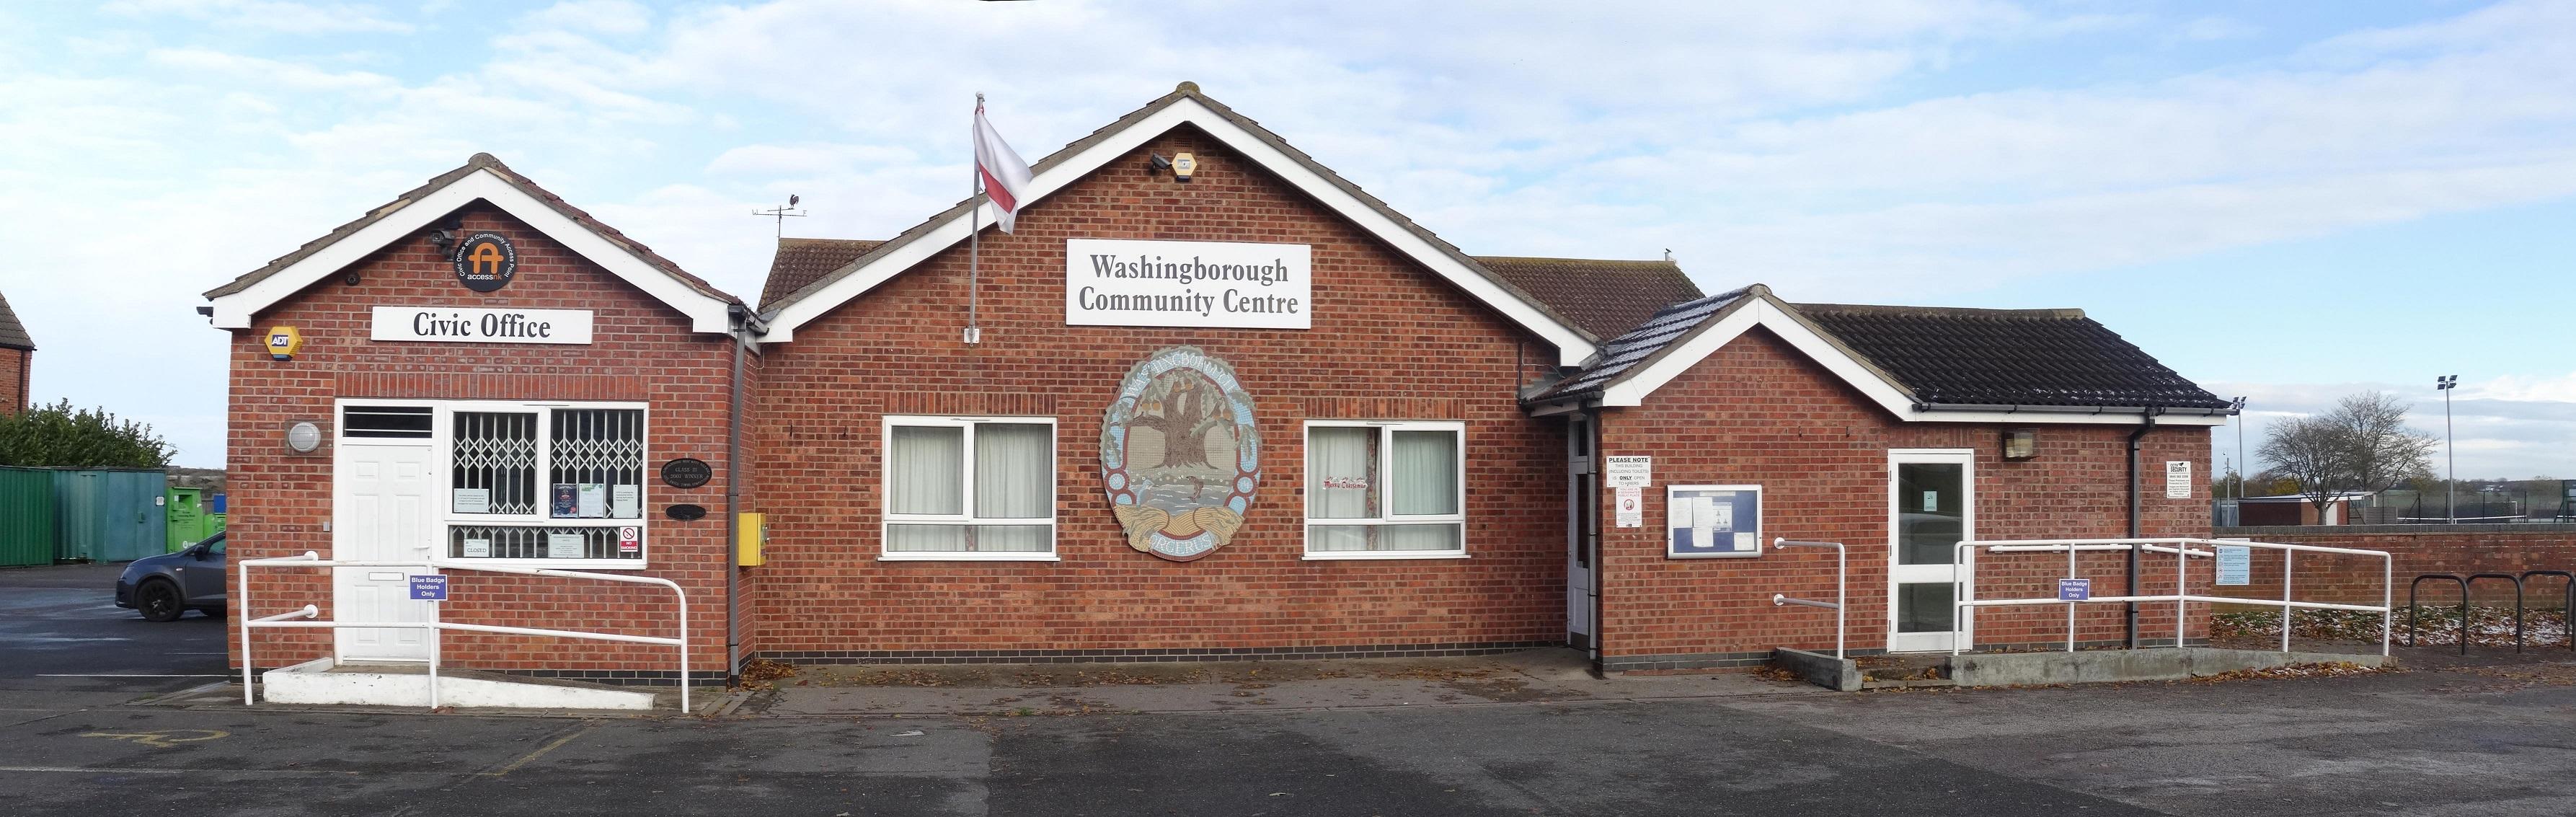 Image of the Community Centre in Washingborough